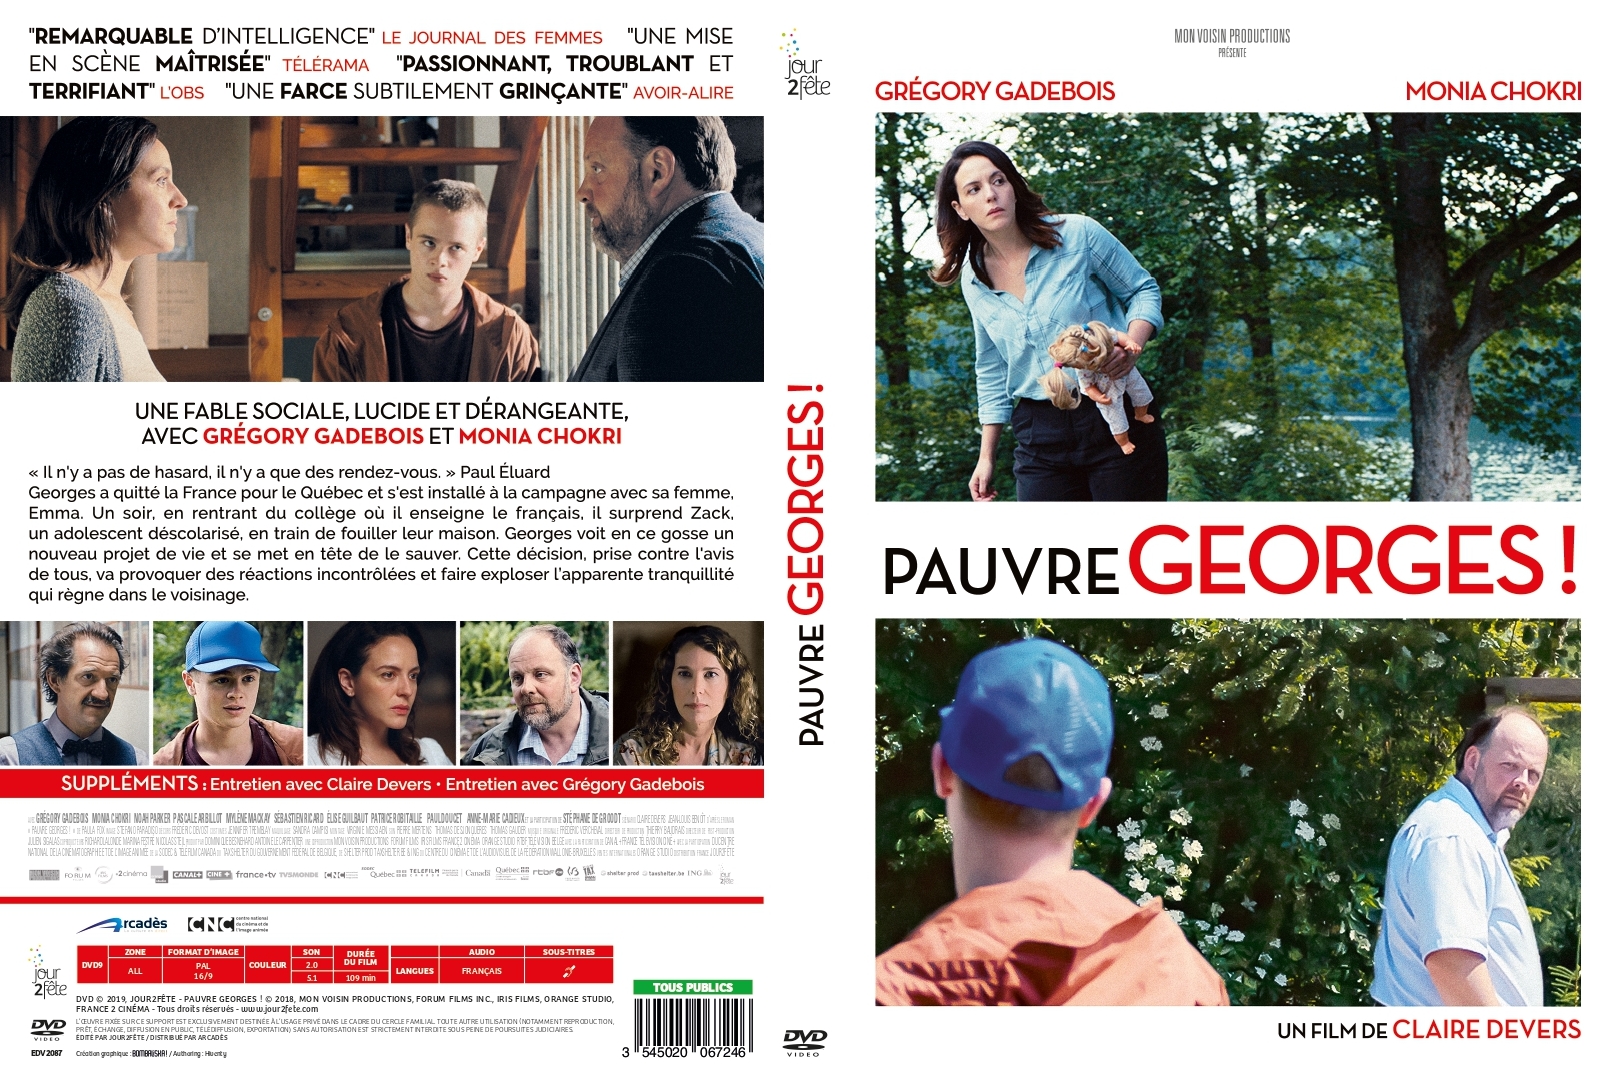 Jaquette DVD Pauvre Georges